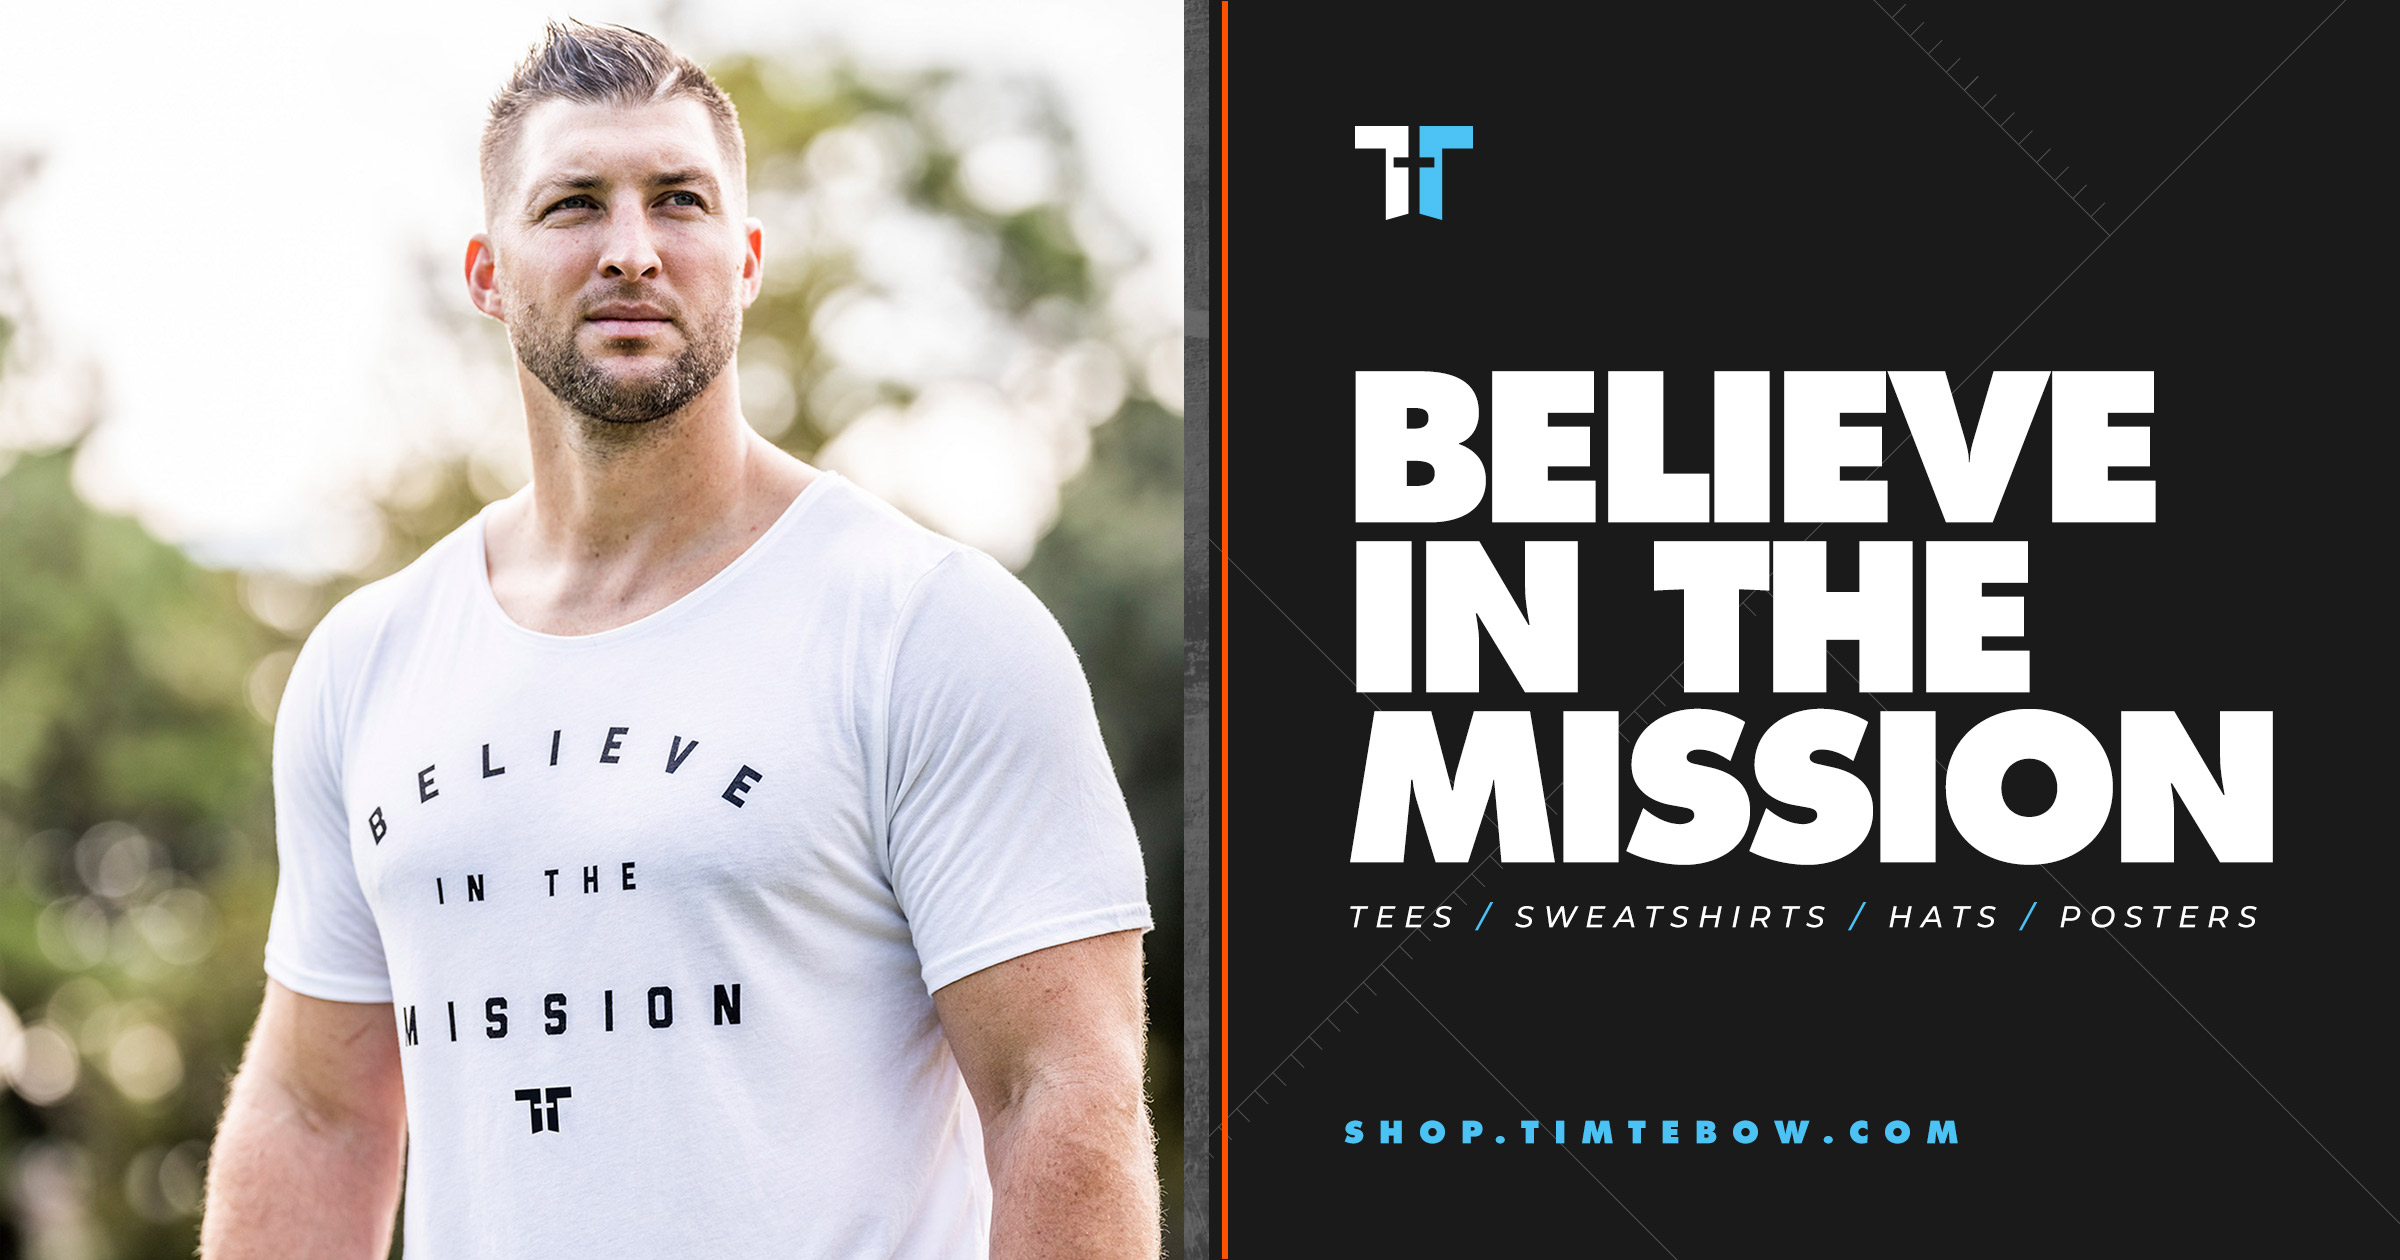 tim tebow foundation shirts